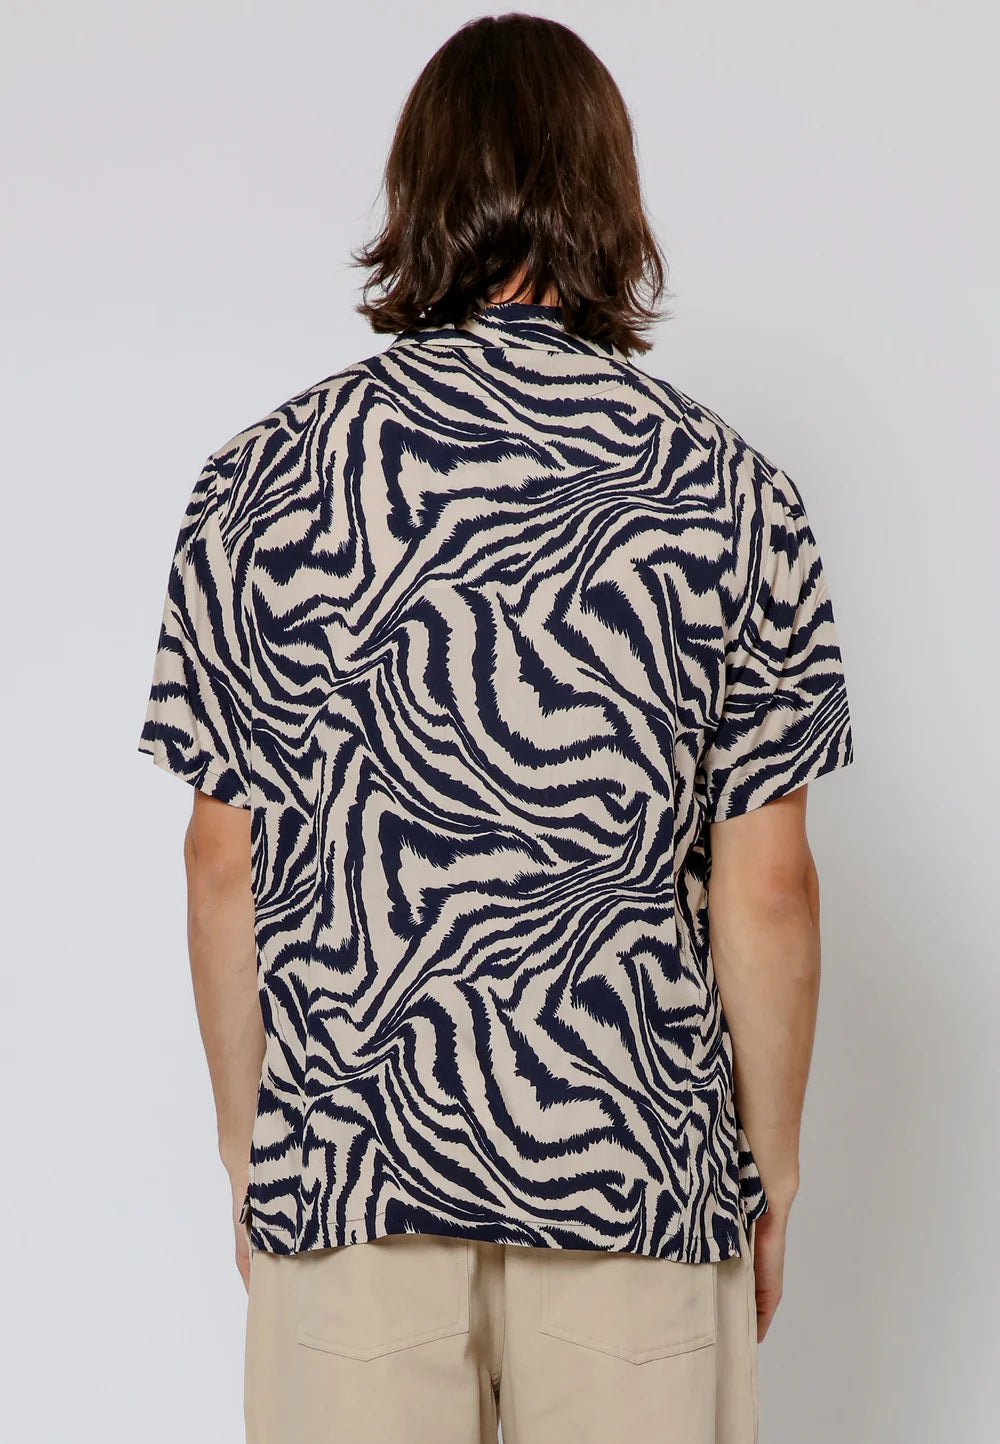 Men's Religion Zebra Printed Shirt Black/Brown